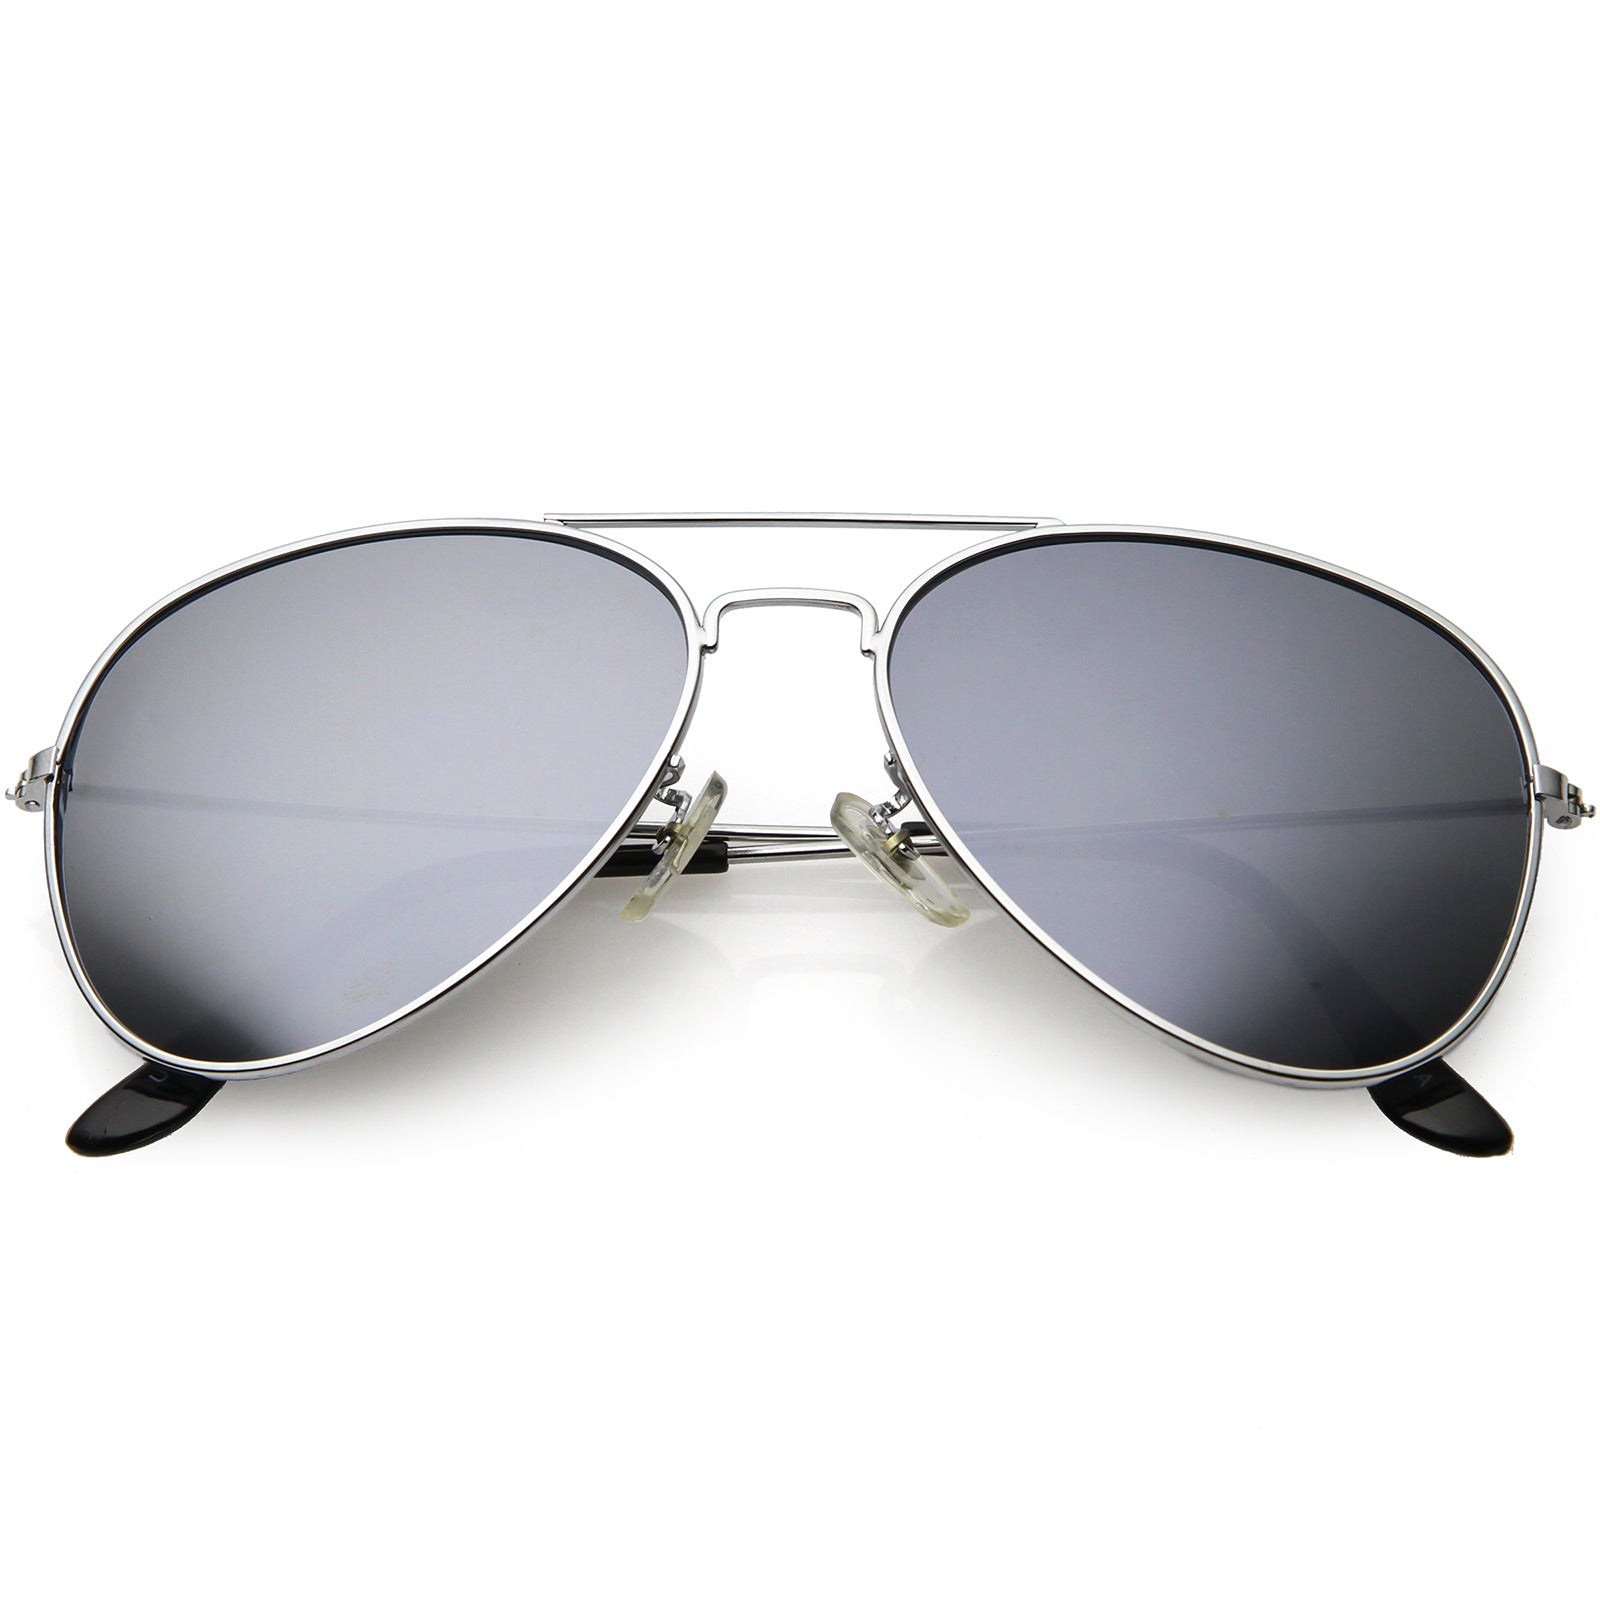 Aviator metal sunglasses